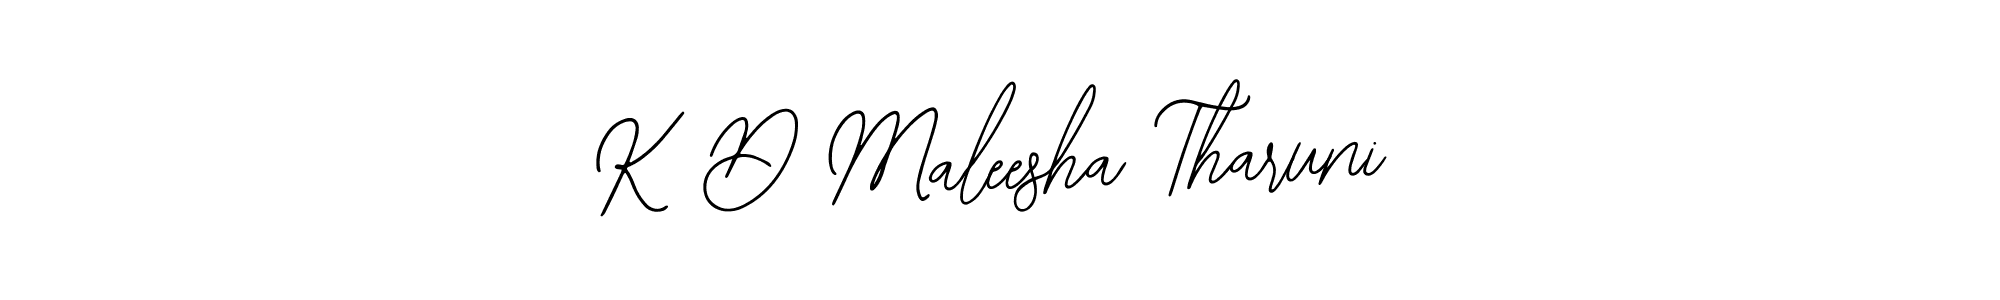 How to Draw K D Maleesha Tharuni signature style? Bearetta-2O07w is a latest design signature styles for name K D Maleesha Tharuni. K D Maleesha Tharuni signature style 12 images and pictures png